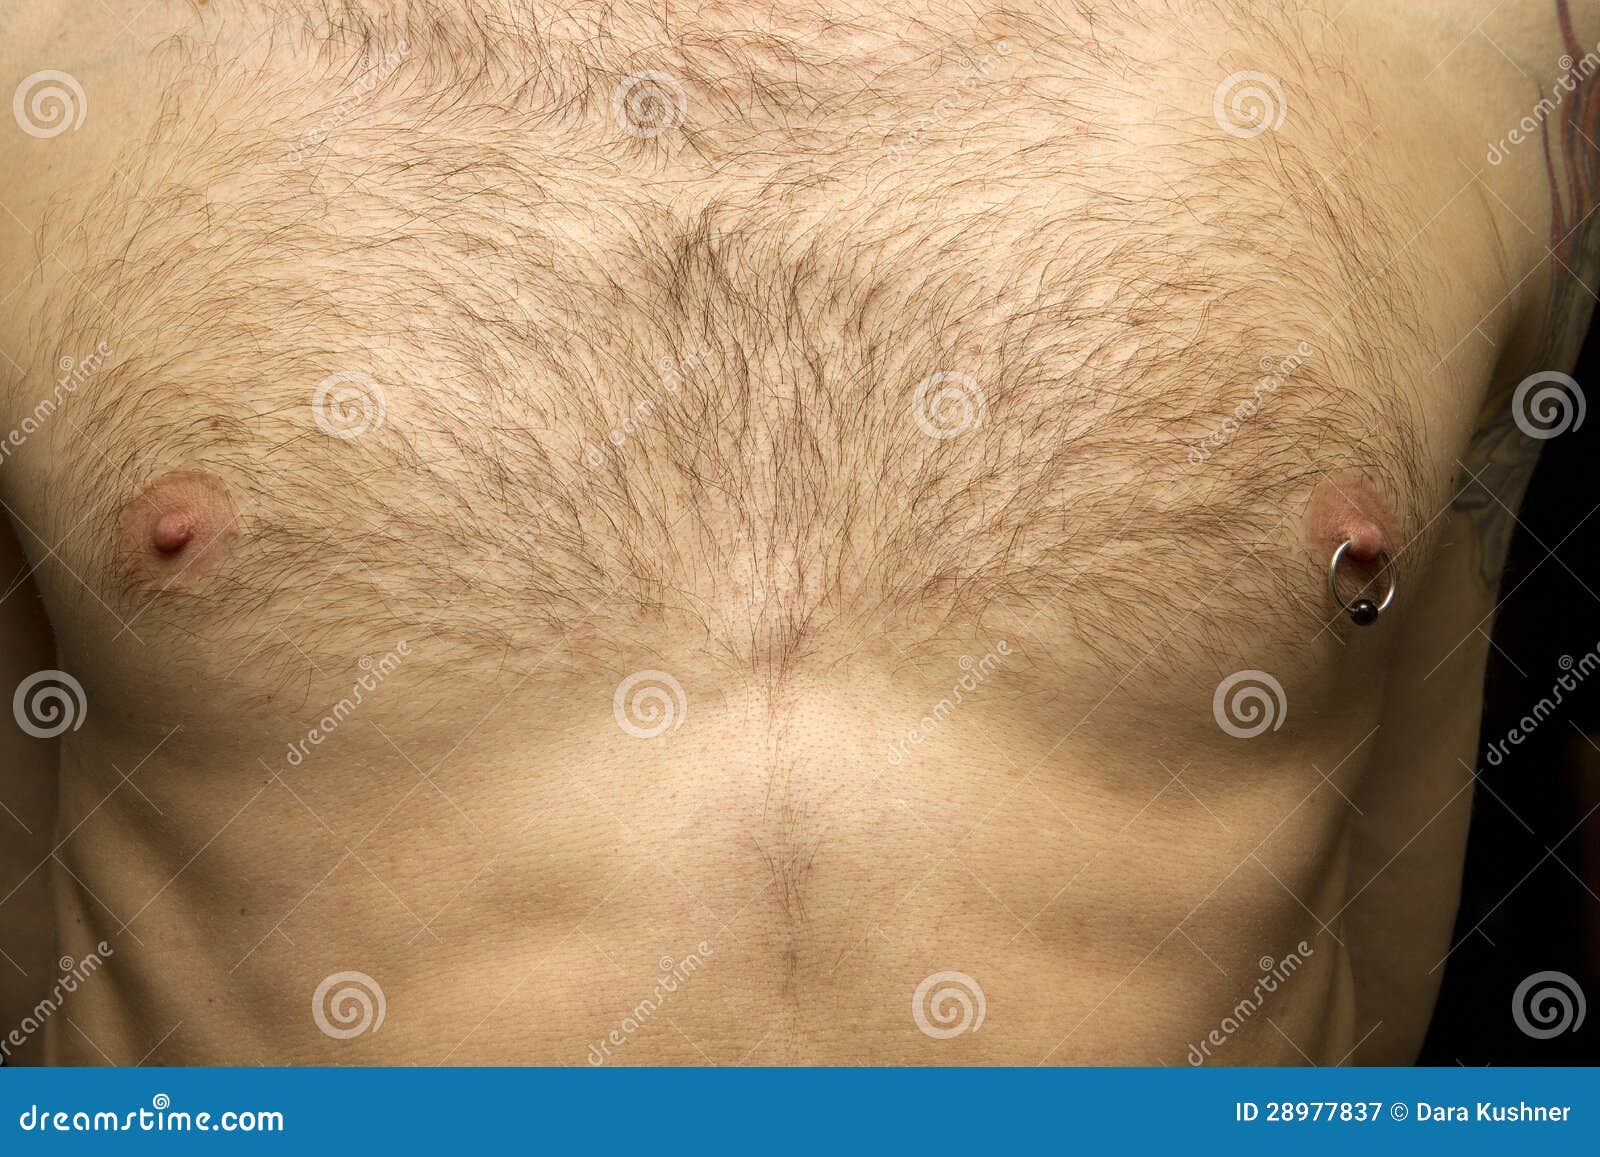 волосы на груди у мужчин форум фото 65